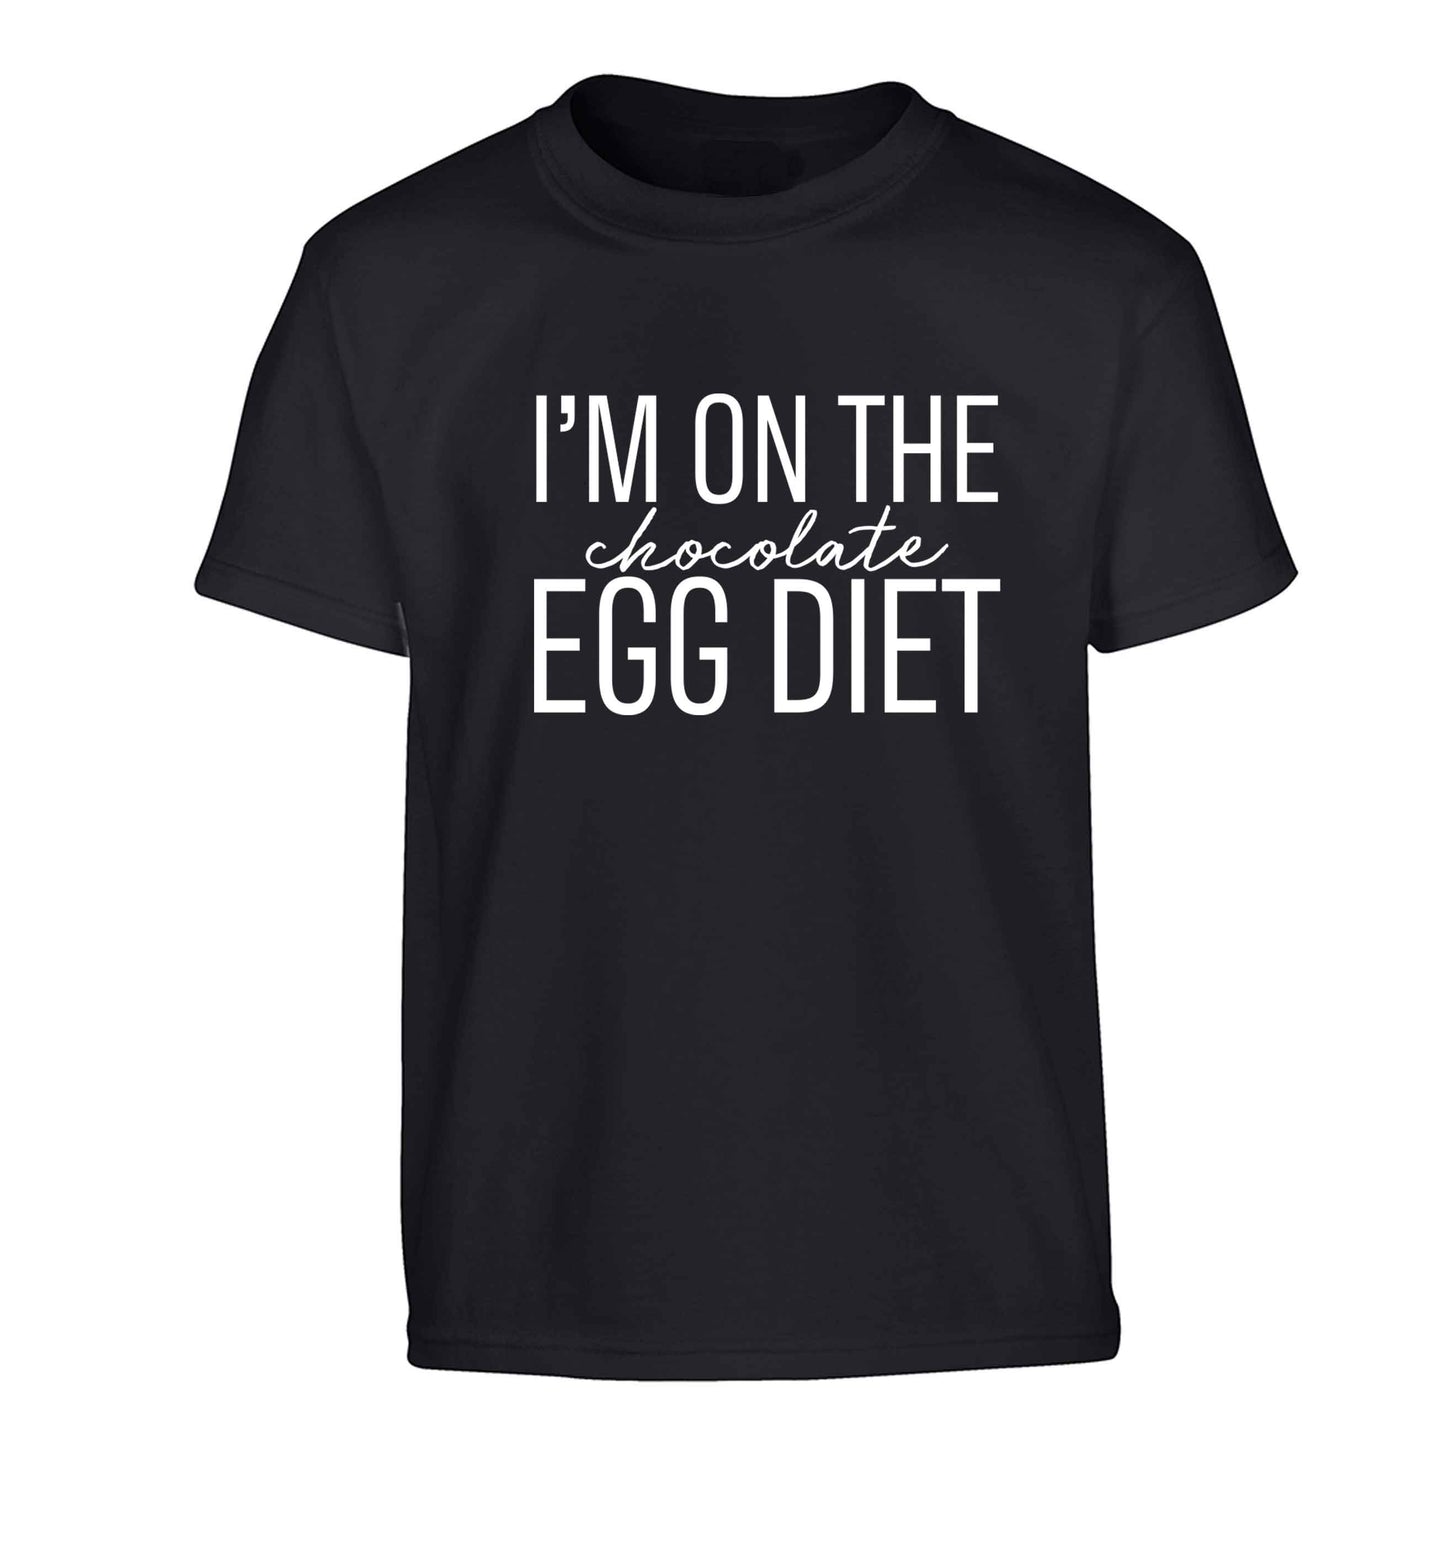 I'm on the chocolate egg diet Children's black Tshirt 12-13 Years